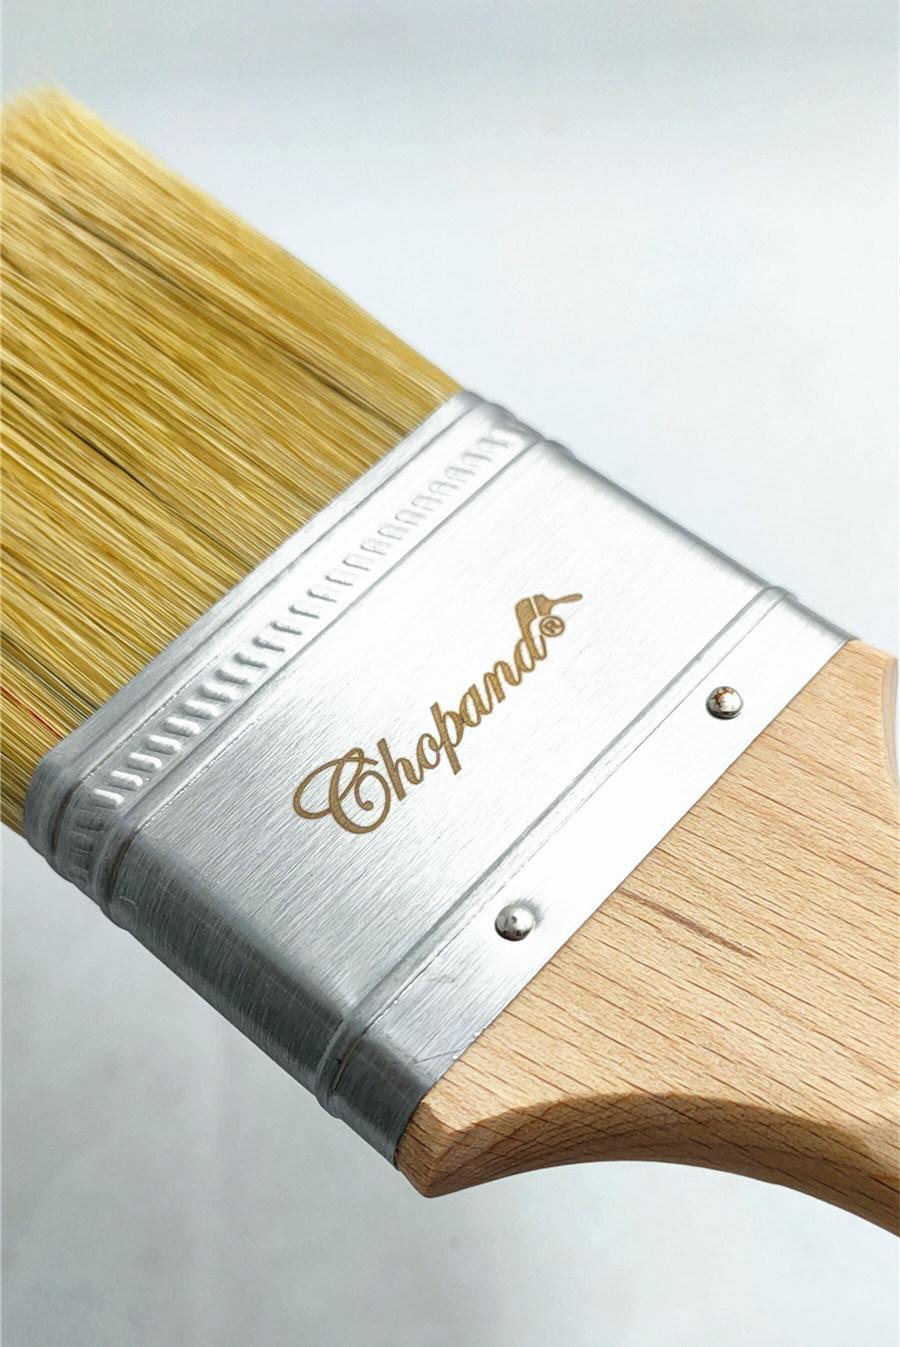 Wholesale Wooden Handle Good Quality Paint Brush